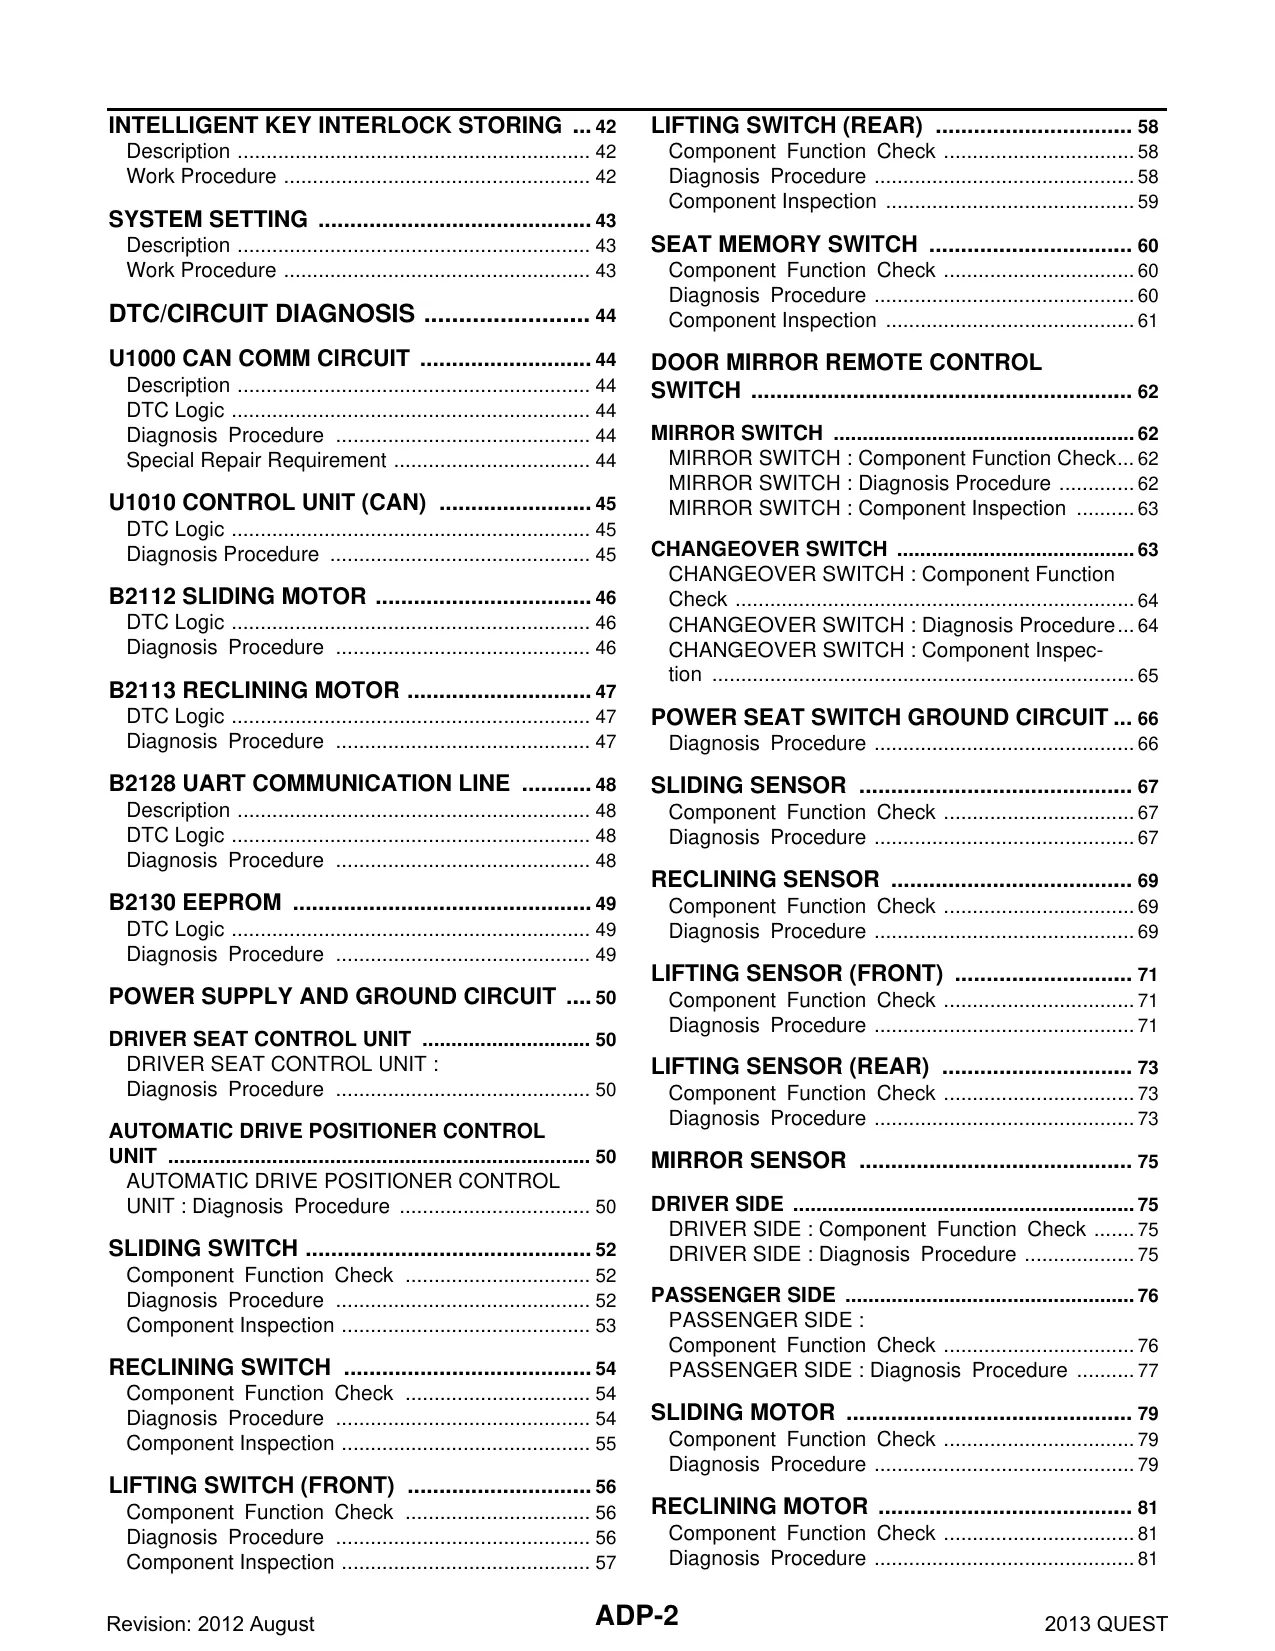 2013 Nissan Quest service manual Preview image 2